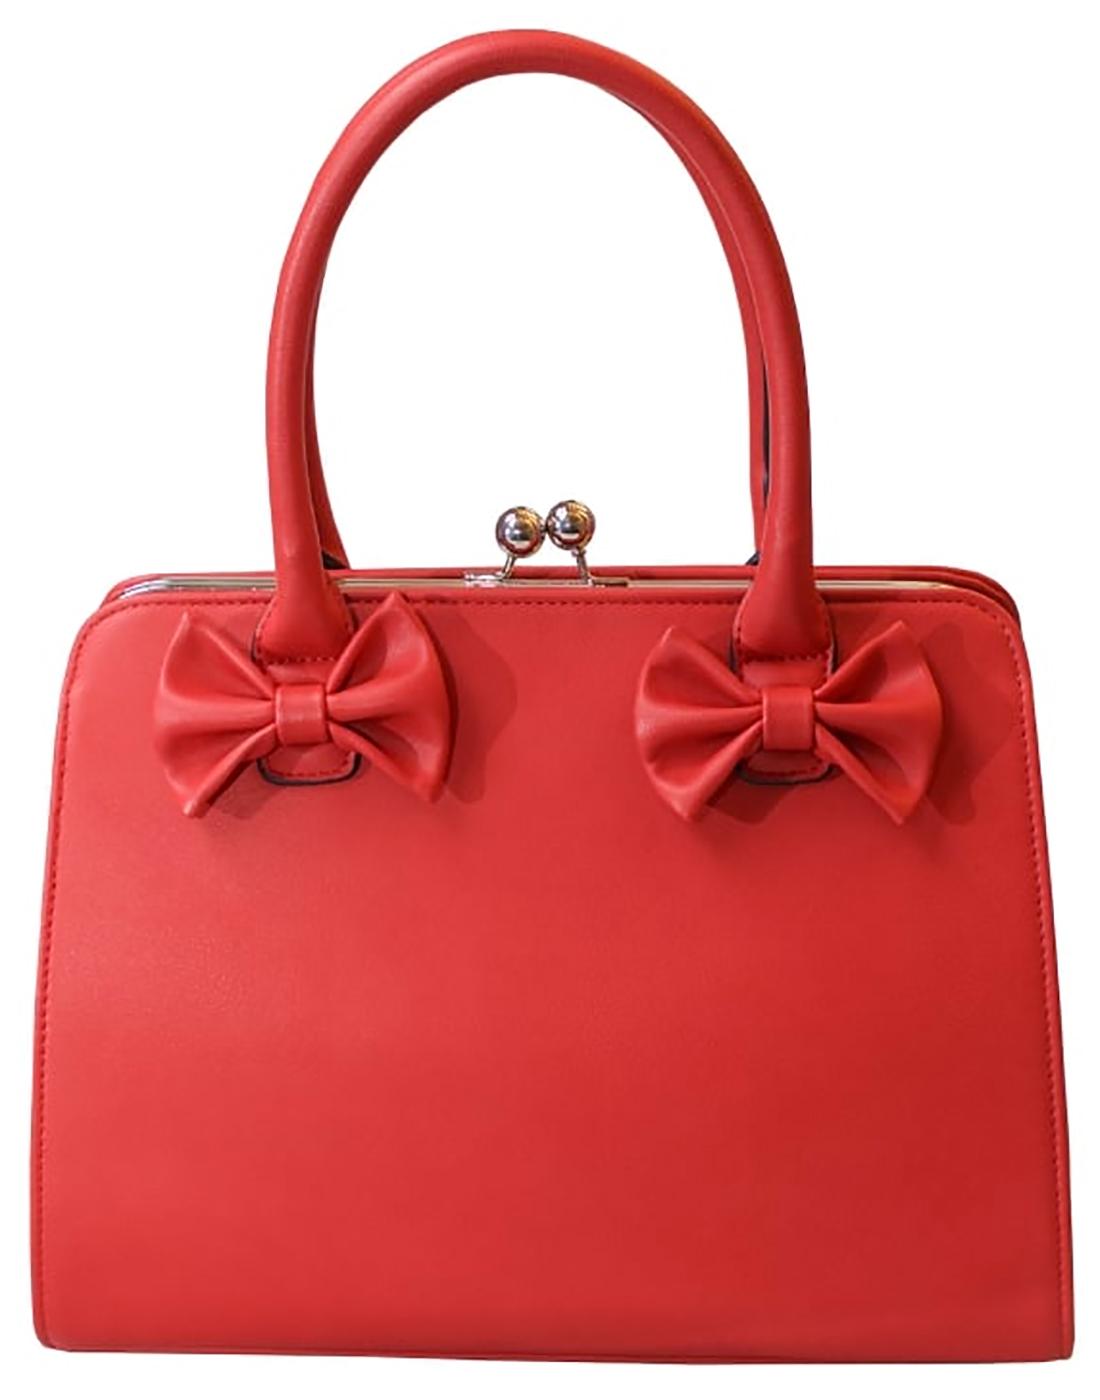 Jessica COLLECTIF Retro 1950s Bow Handbag in Red